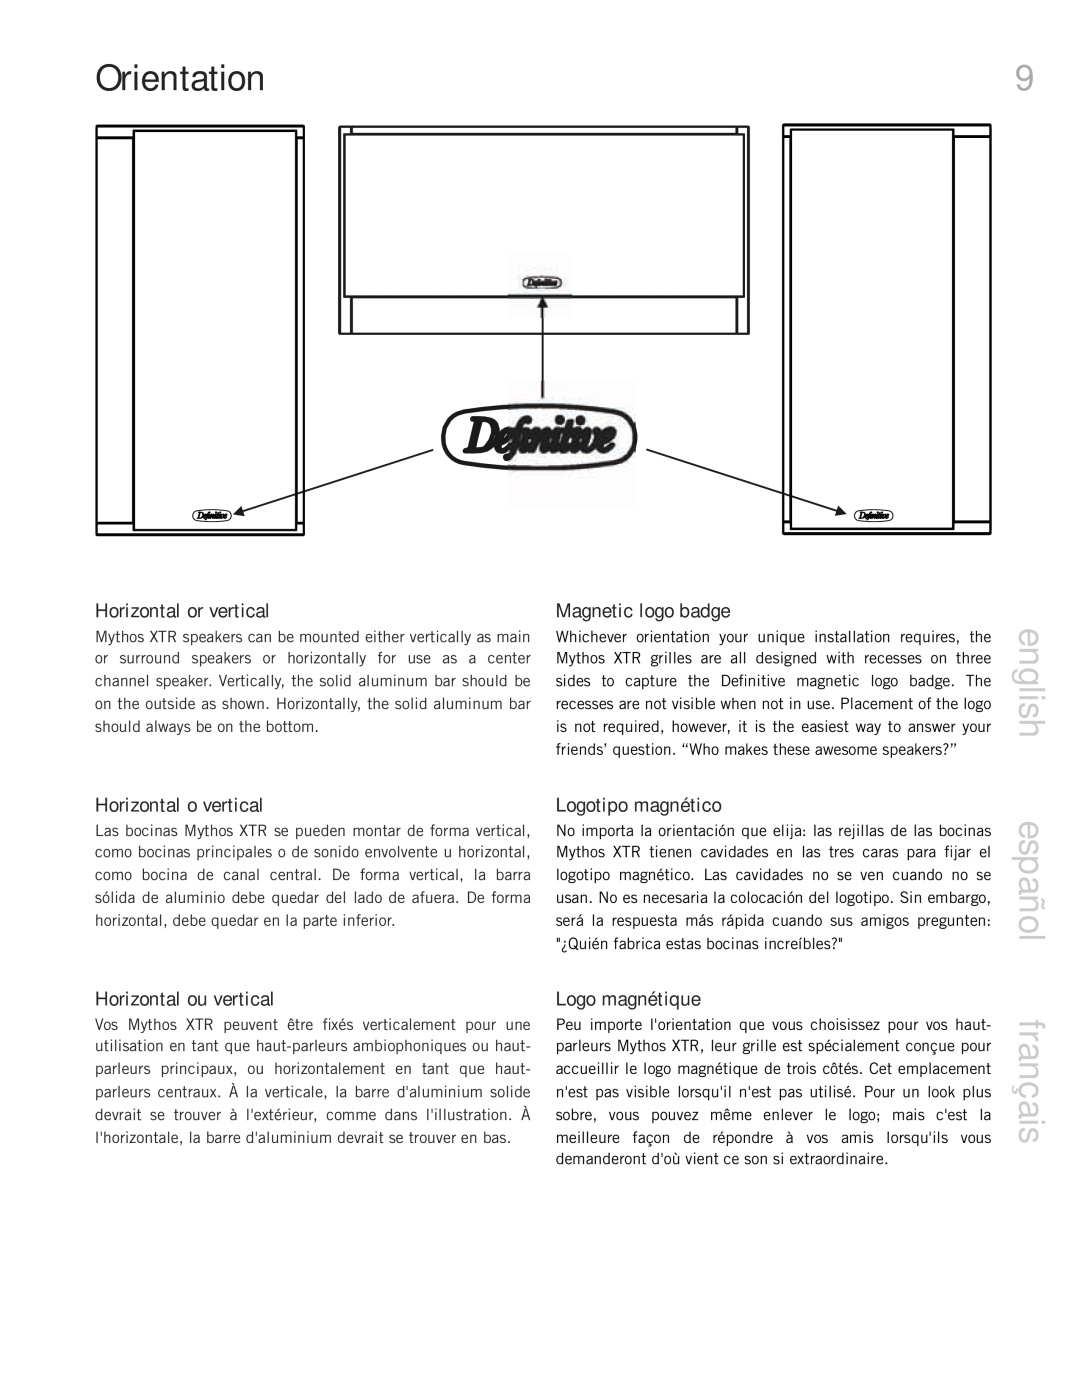 Definitive Technology Mythos XTR Loudspeaker System, 60, 50 Orientation, english, español, français, Horizontal or vertical 